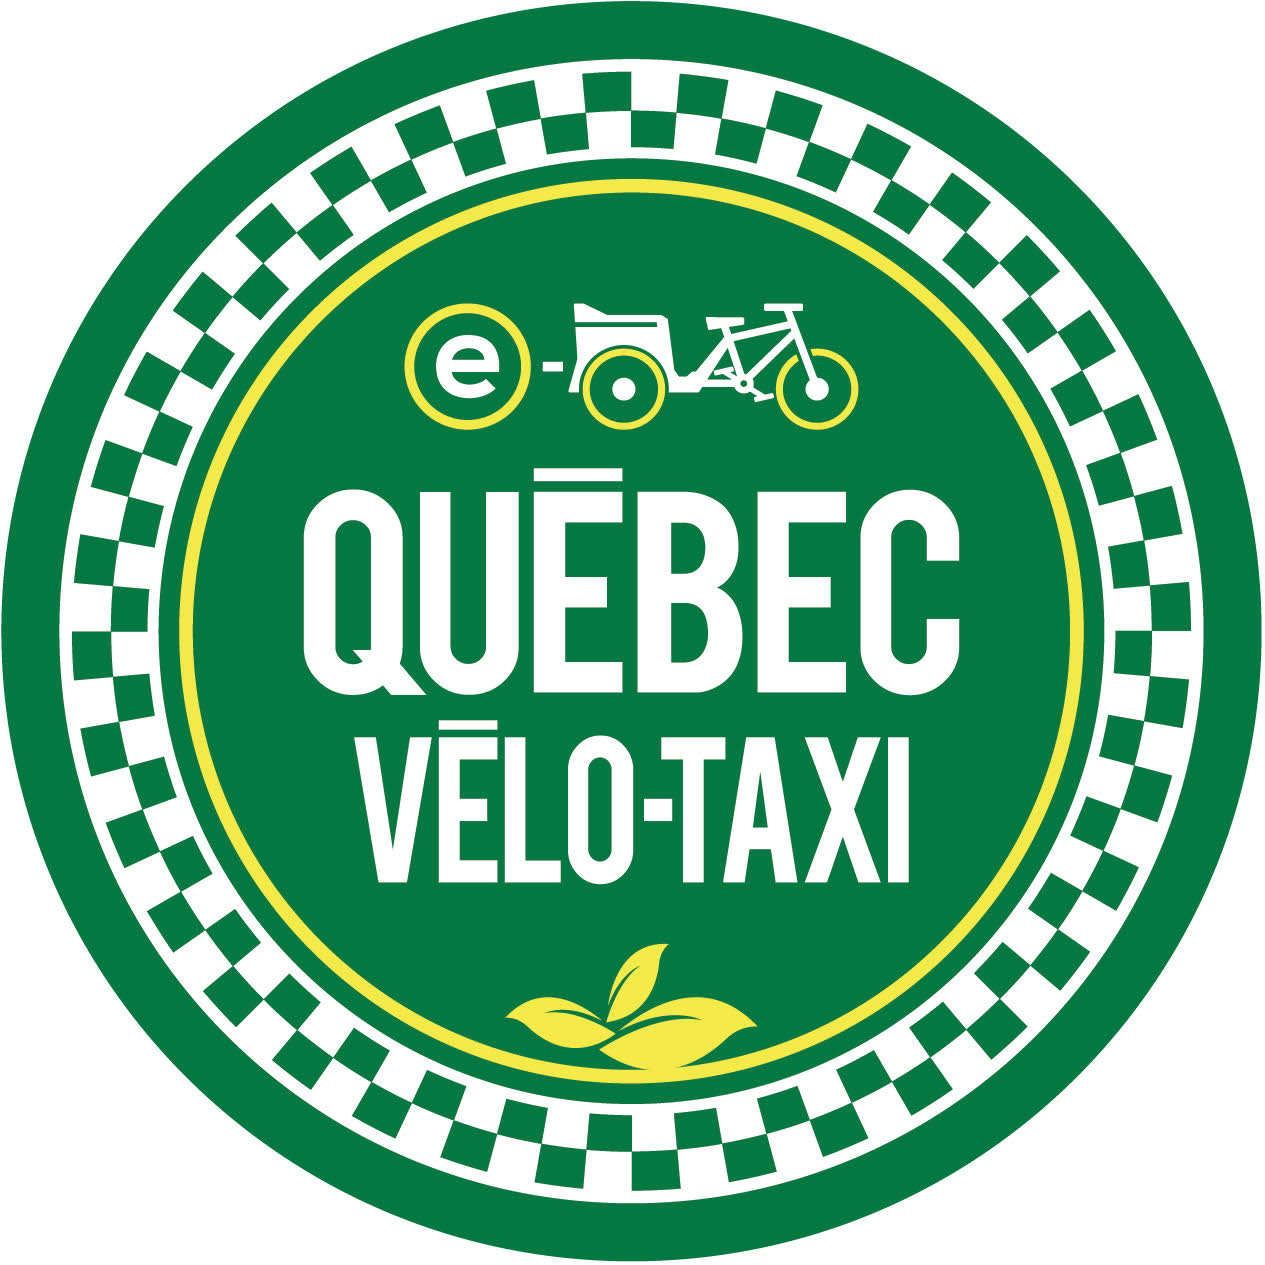 1 - Québec Vélo Taxi version finale